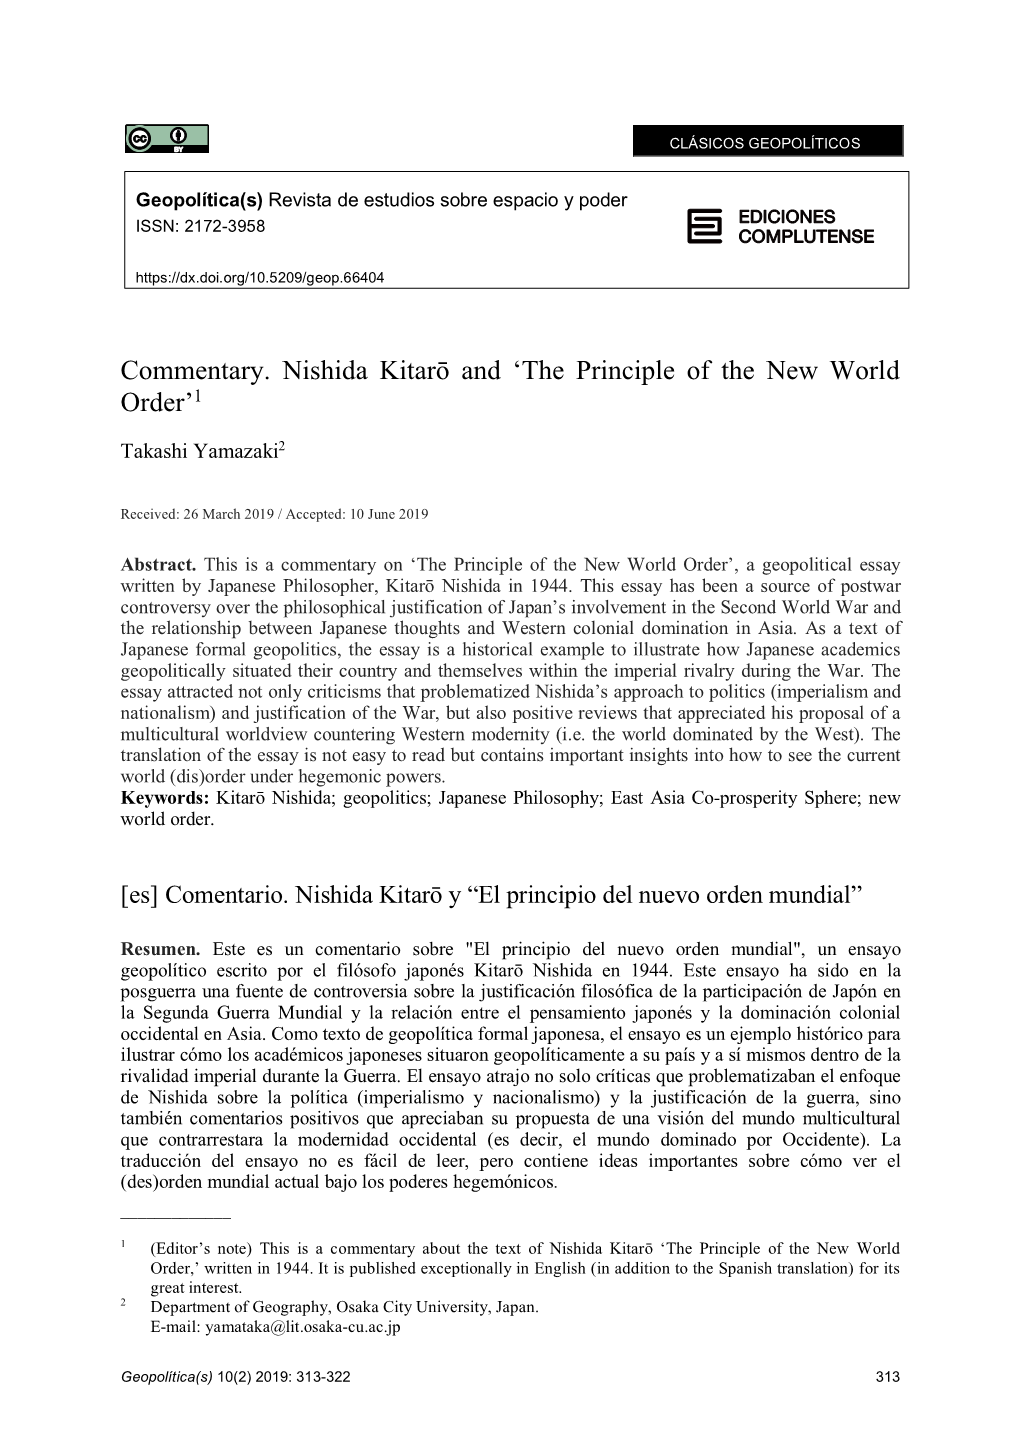 Commentary. Nishida Kitarō and 'The Principle of the New World Order'